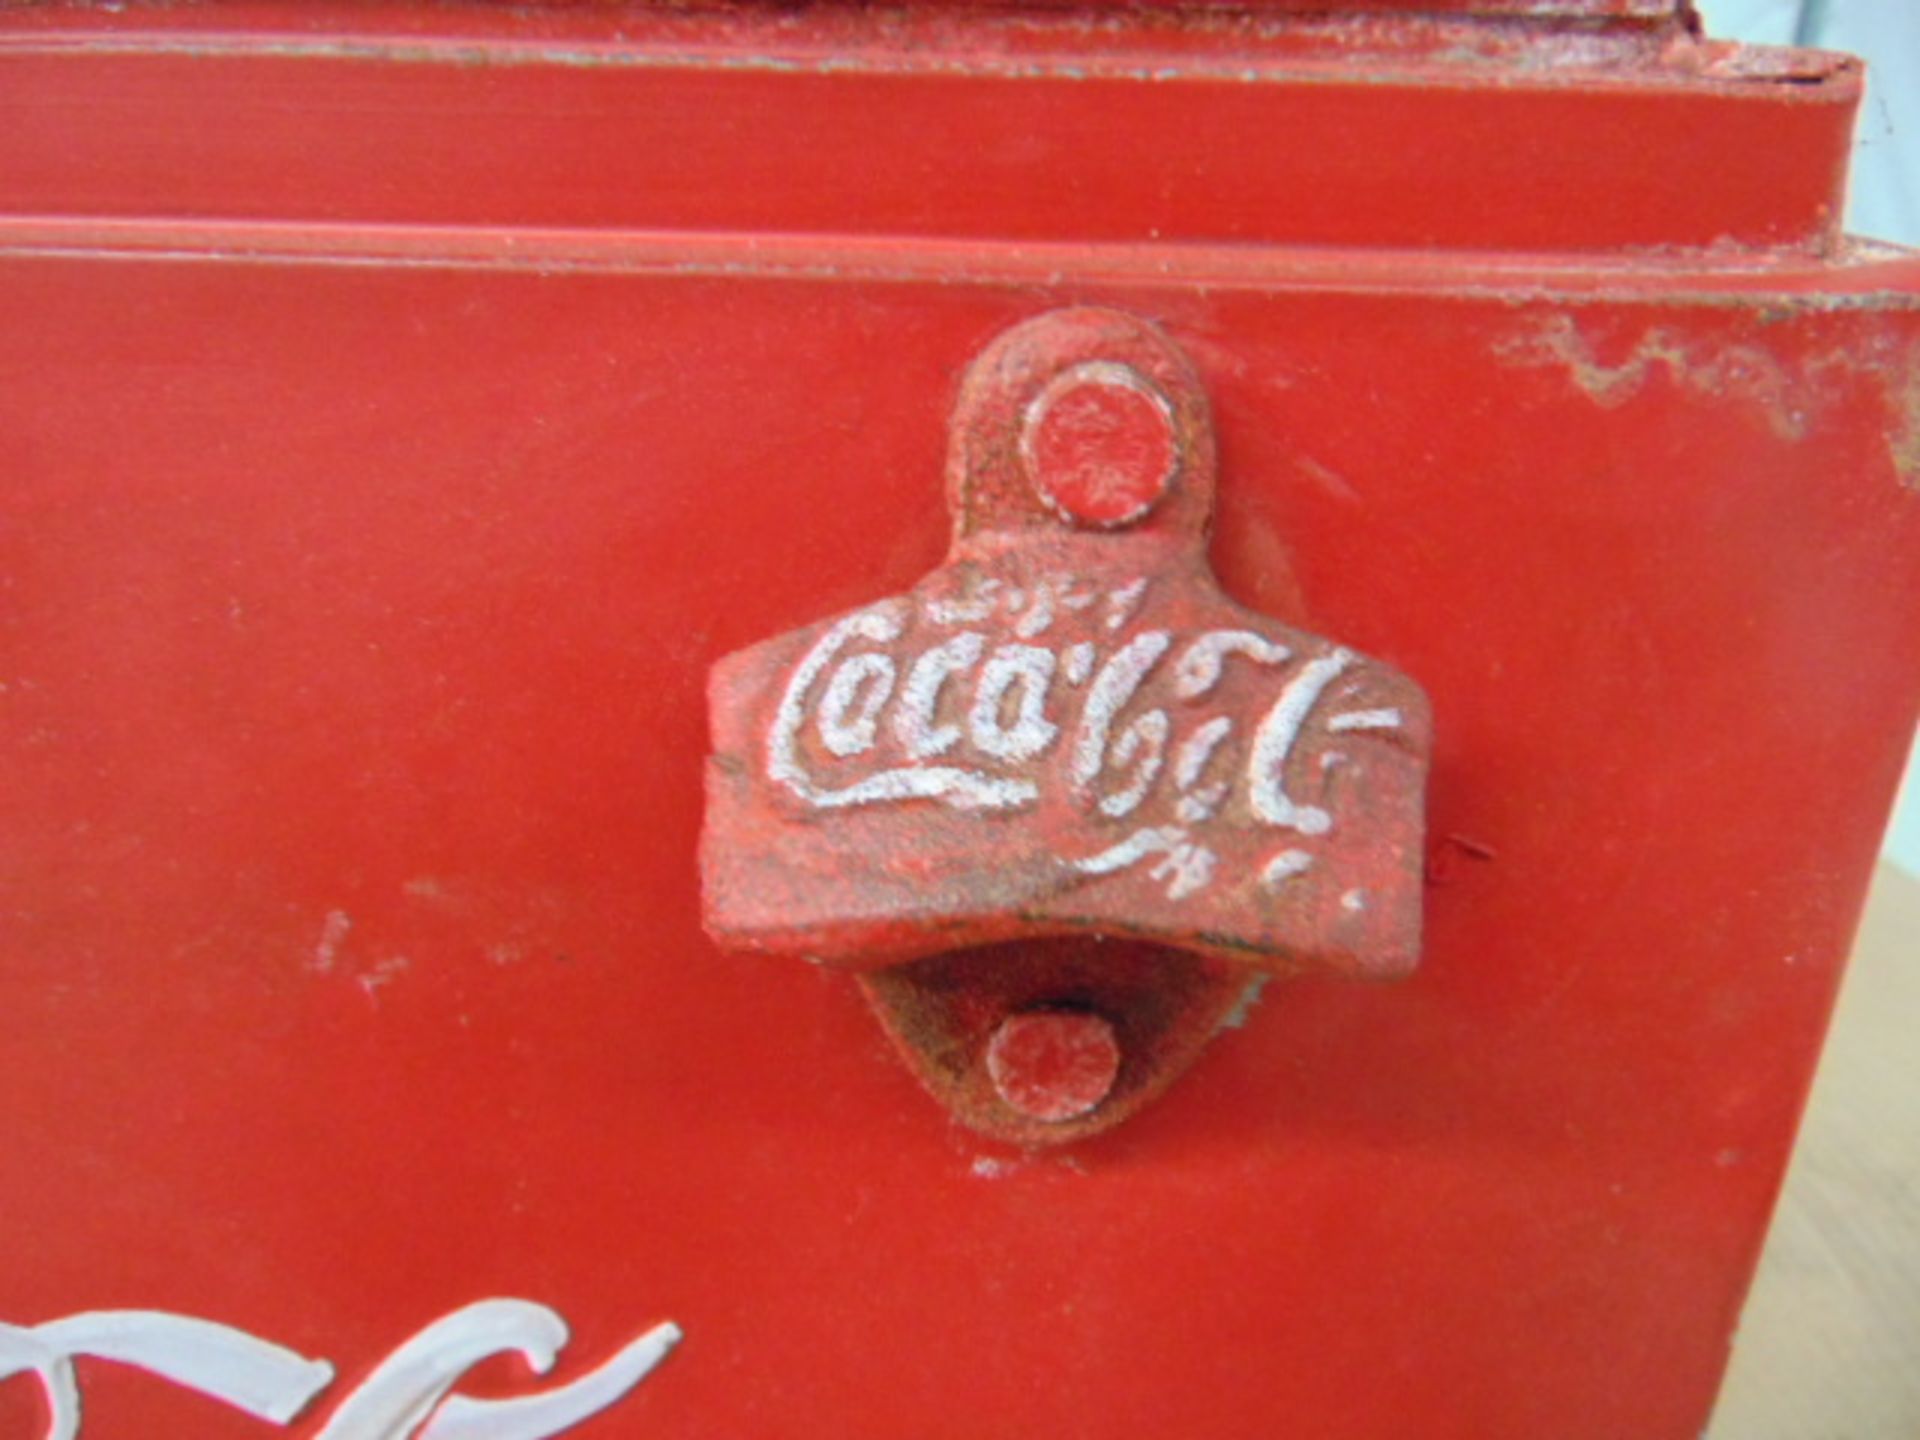 Vintage Coca Cola Cooler / Ice Box - Image 4 of 7